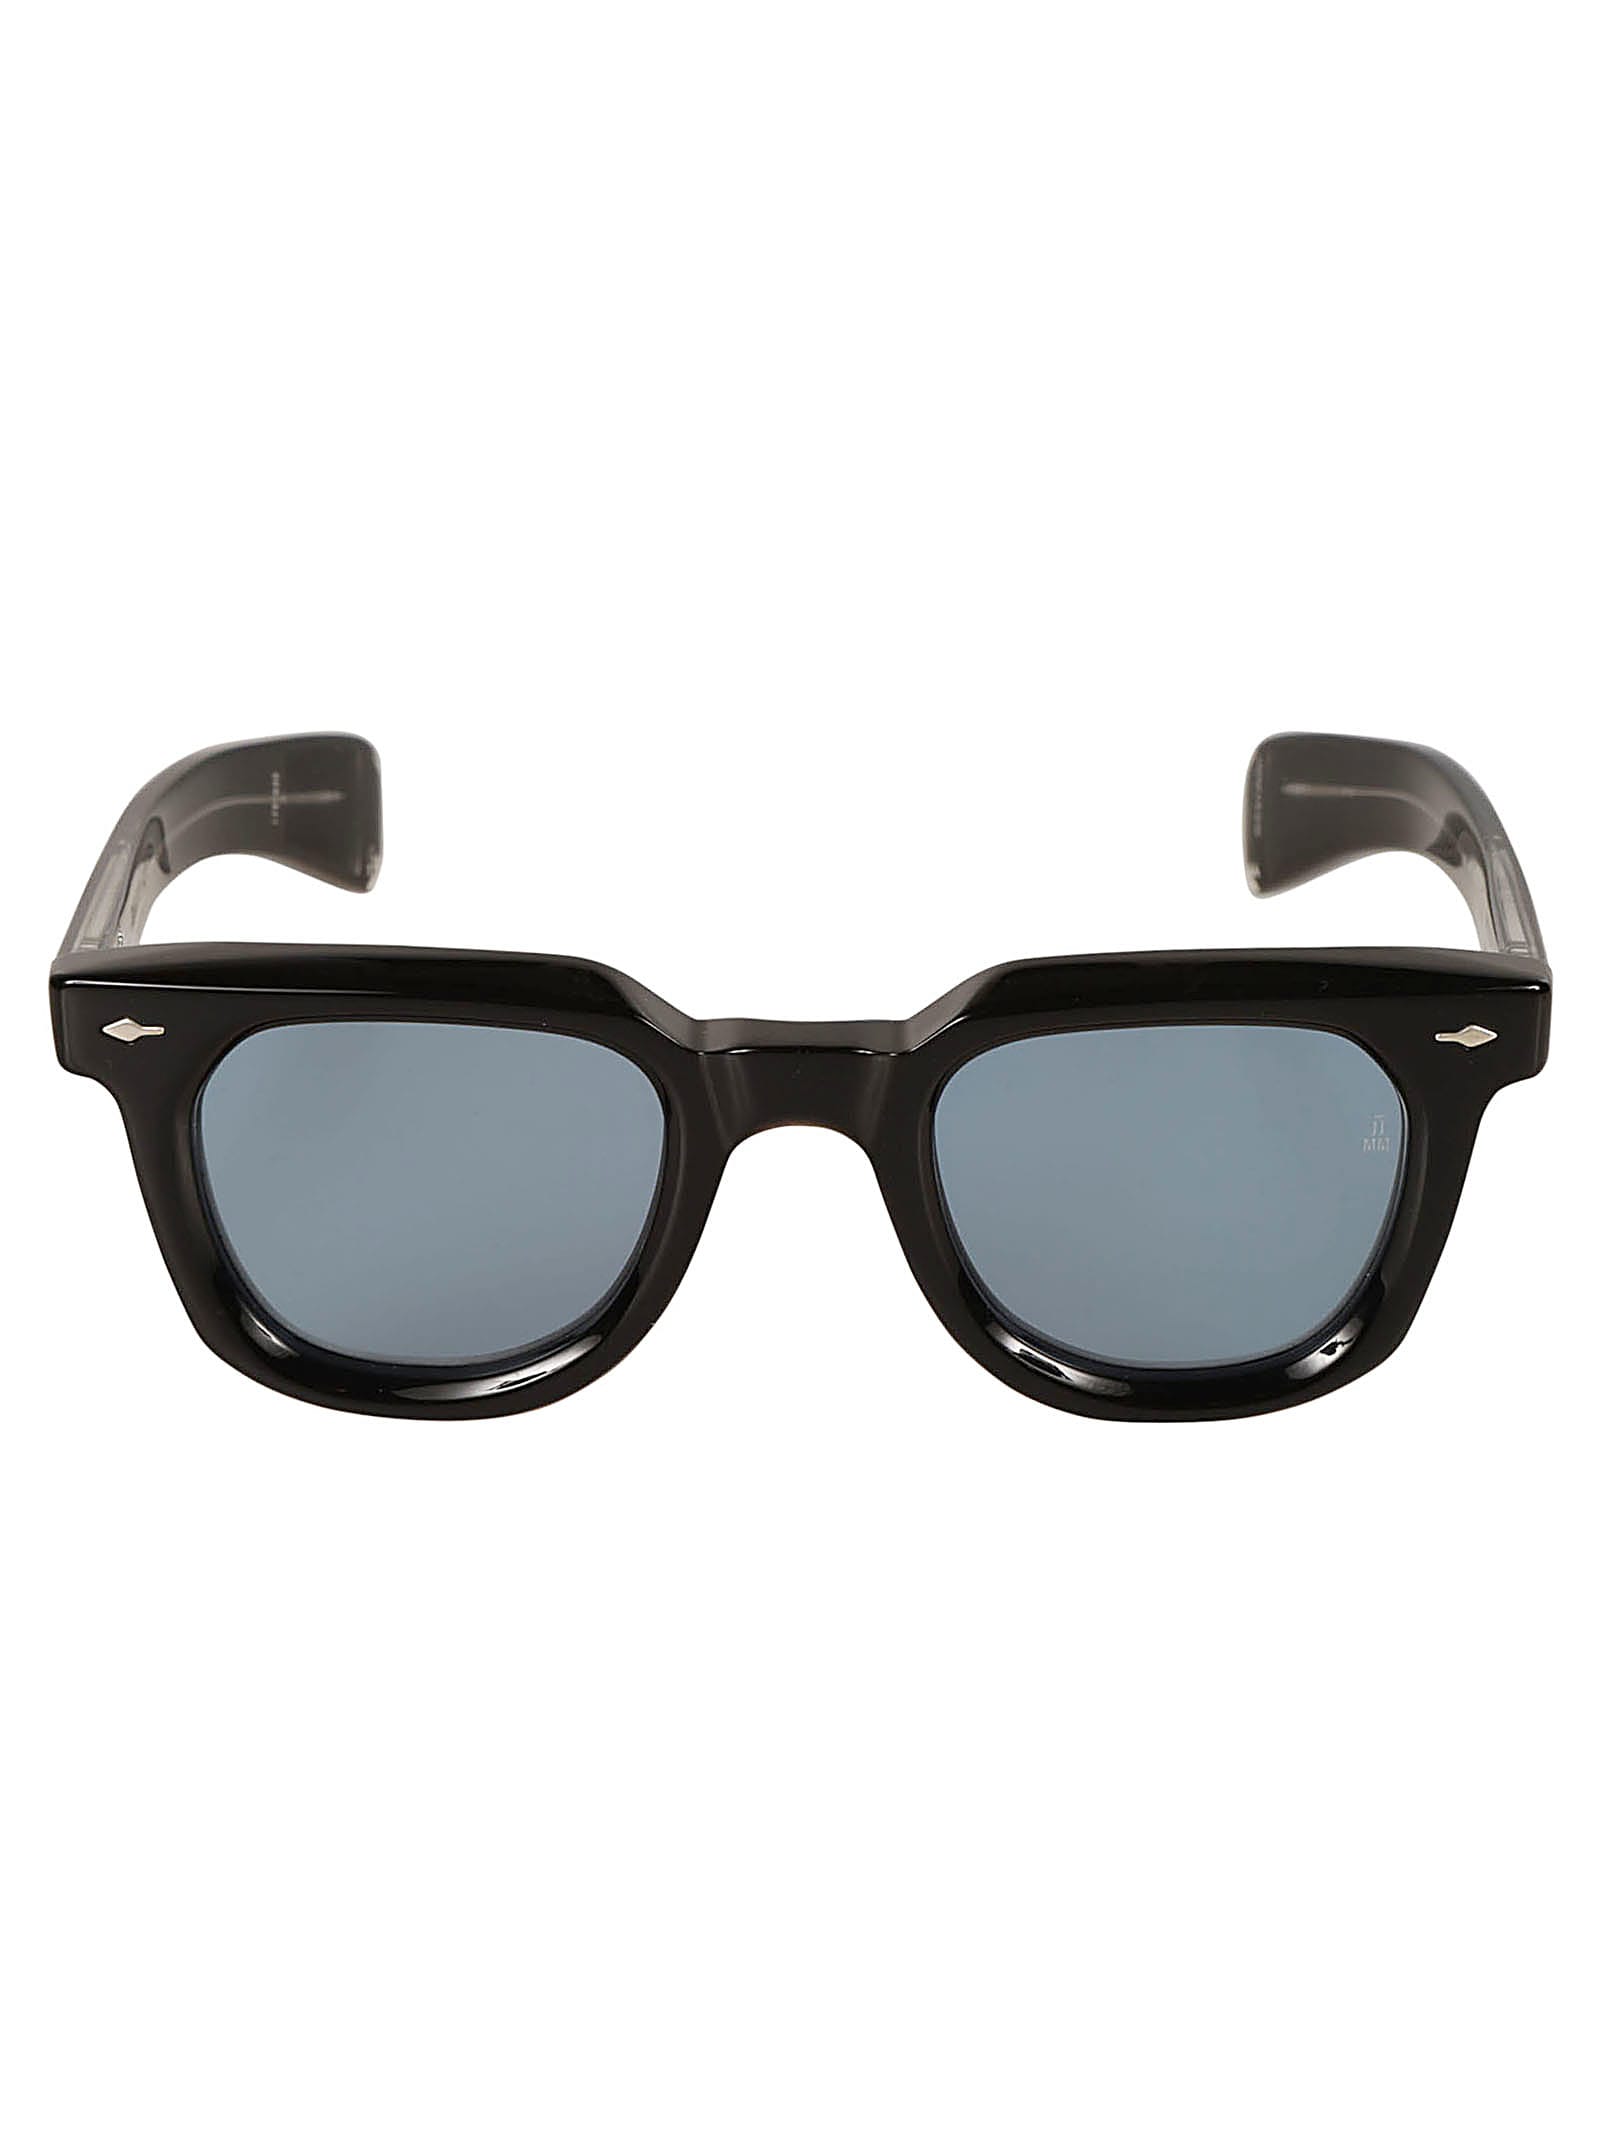 Jacques Marie Mage Vendome Sunglasses Sunglasses In Black